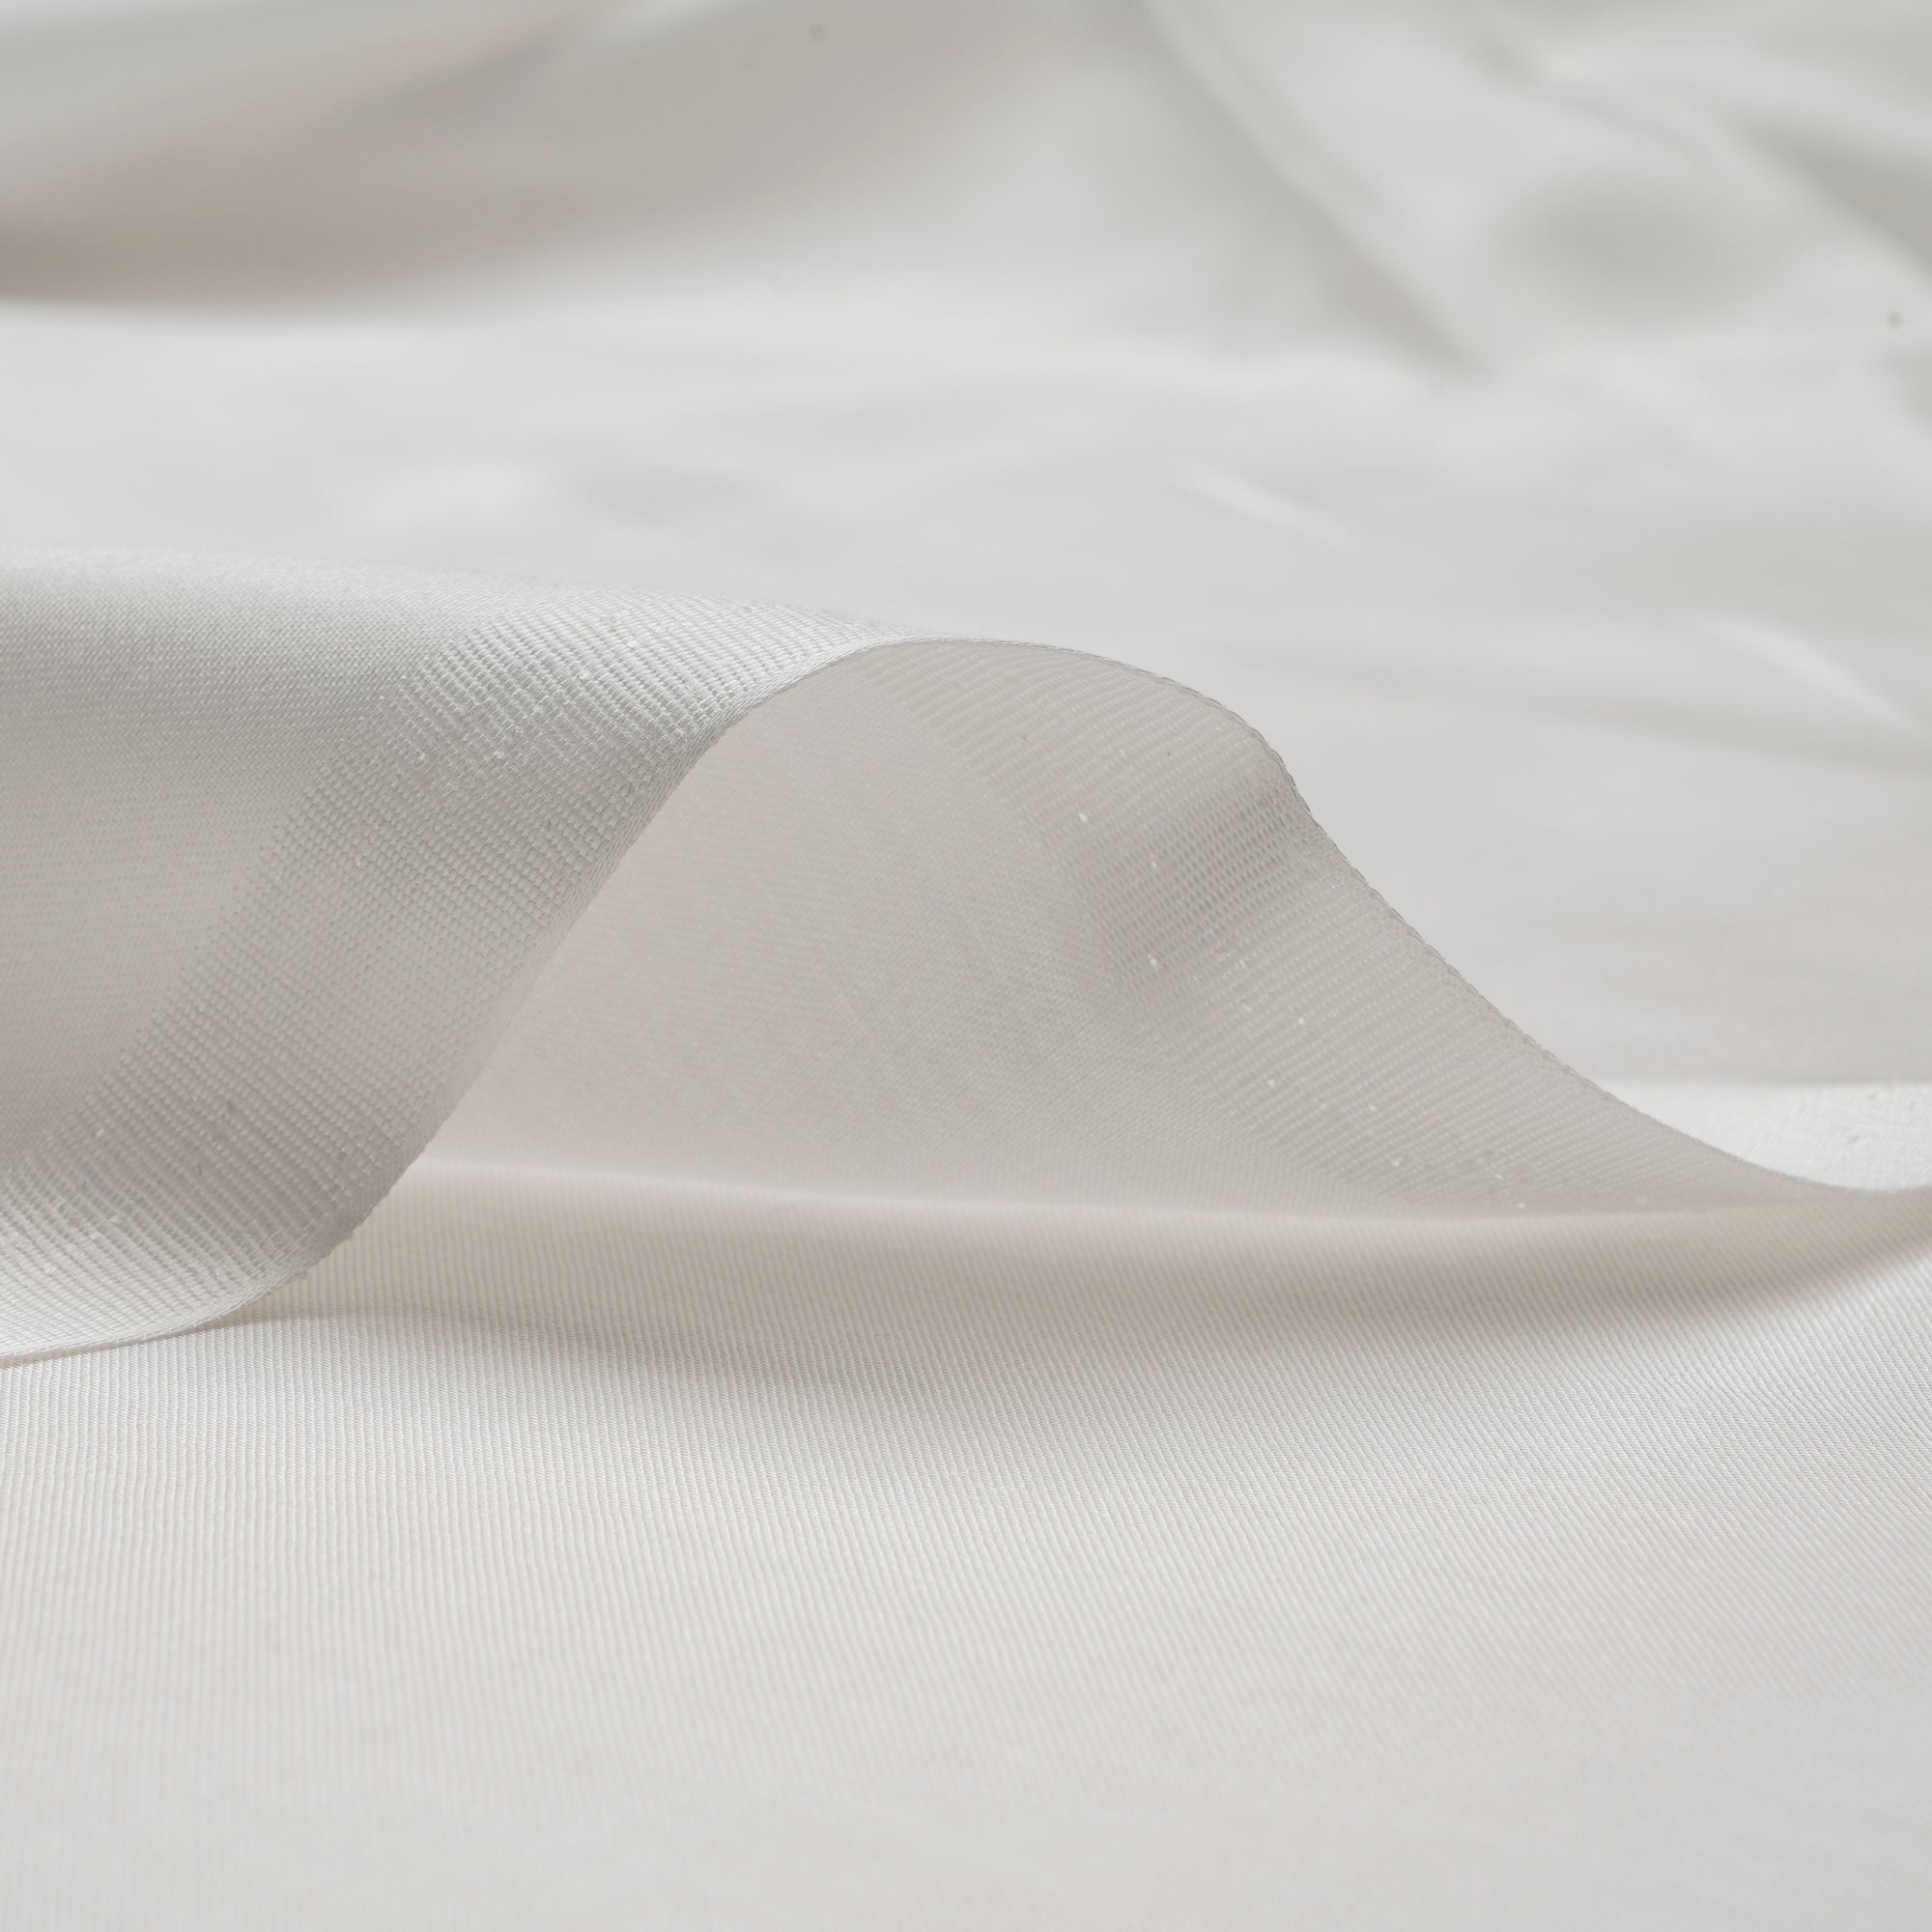 White Dyeable Plain Modal Maple Silk Fabric